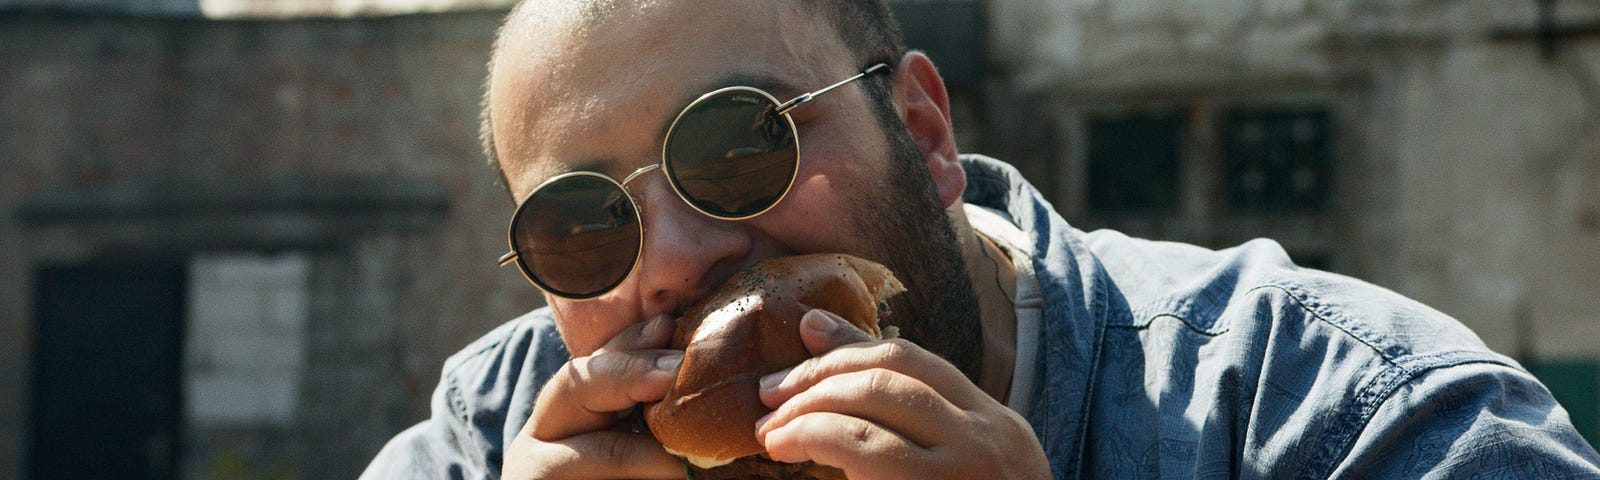 Large man eating a large hamburger.